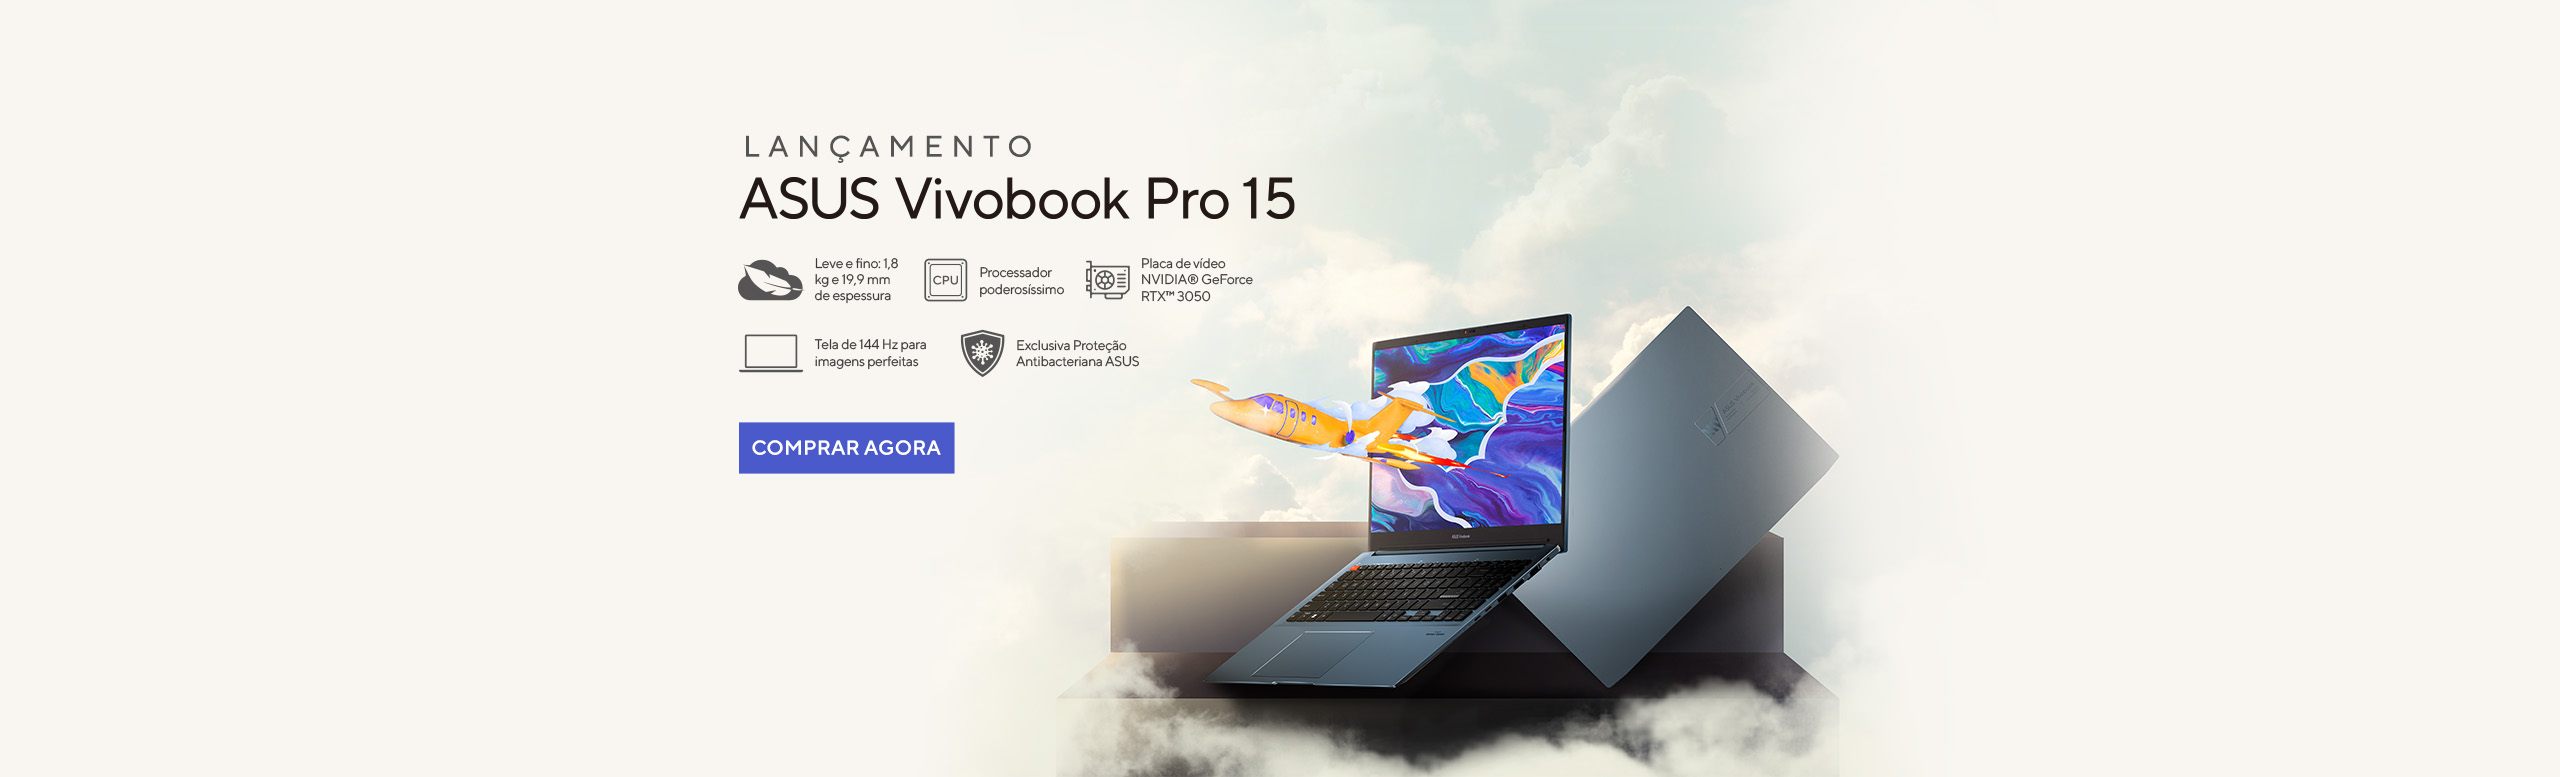 Vivobook Pro 15 - Grupo